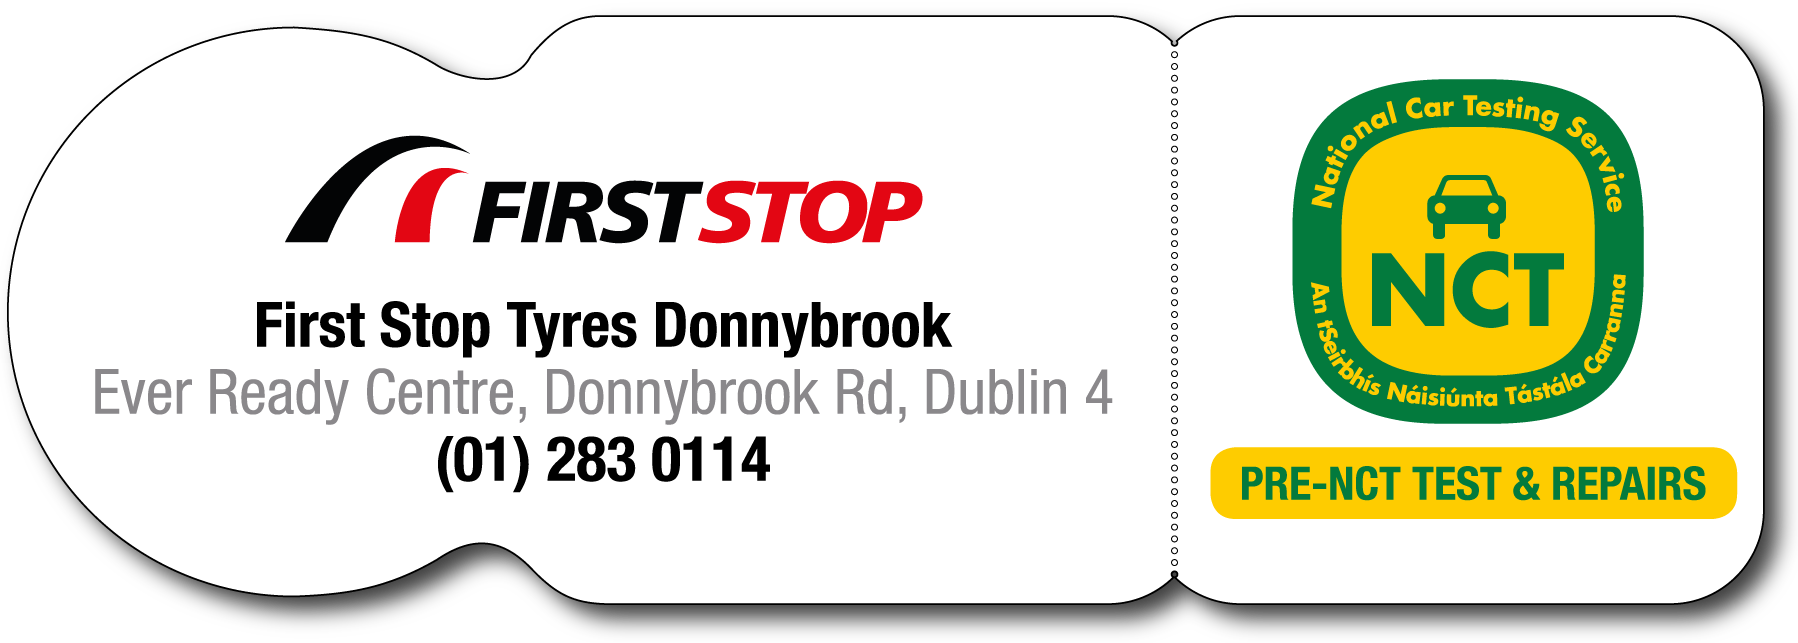 Tax Disk Holder First Stop Donnybrook V4 - First Stop (1798x643)